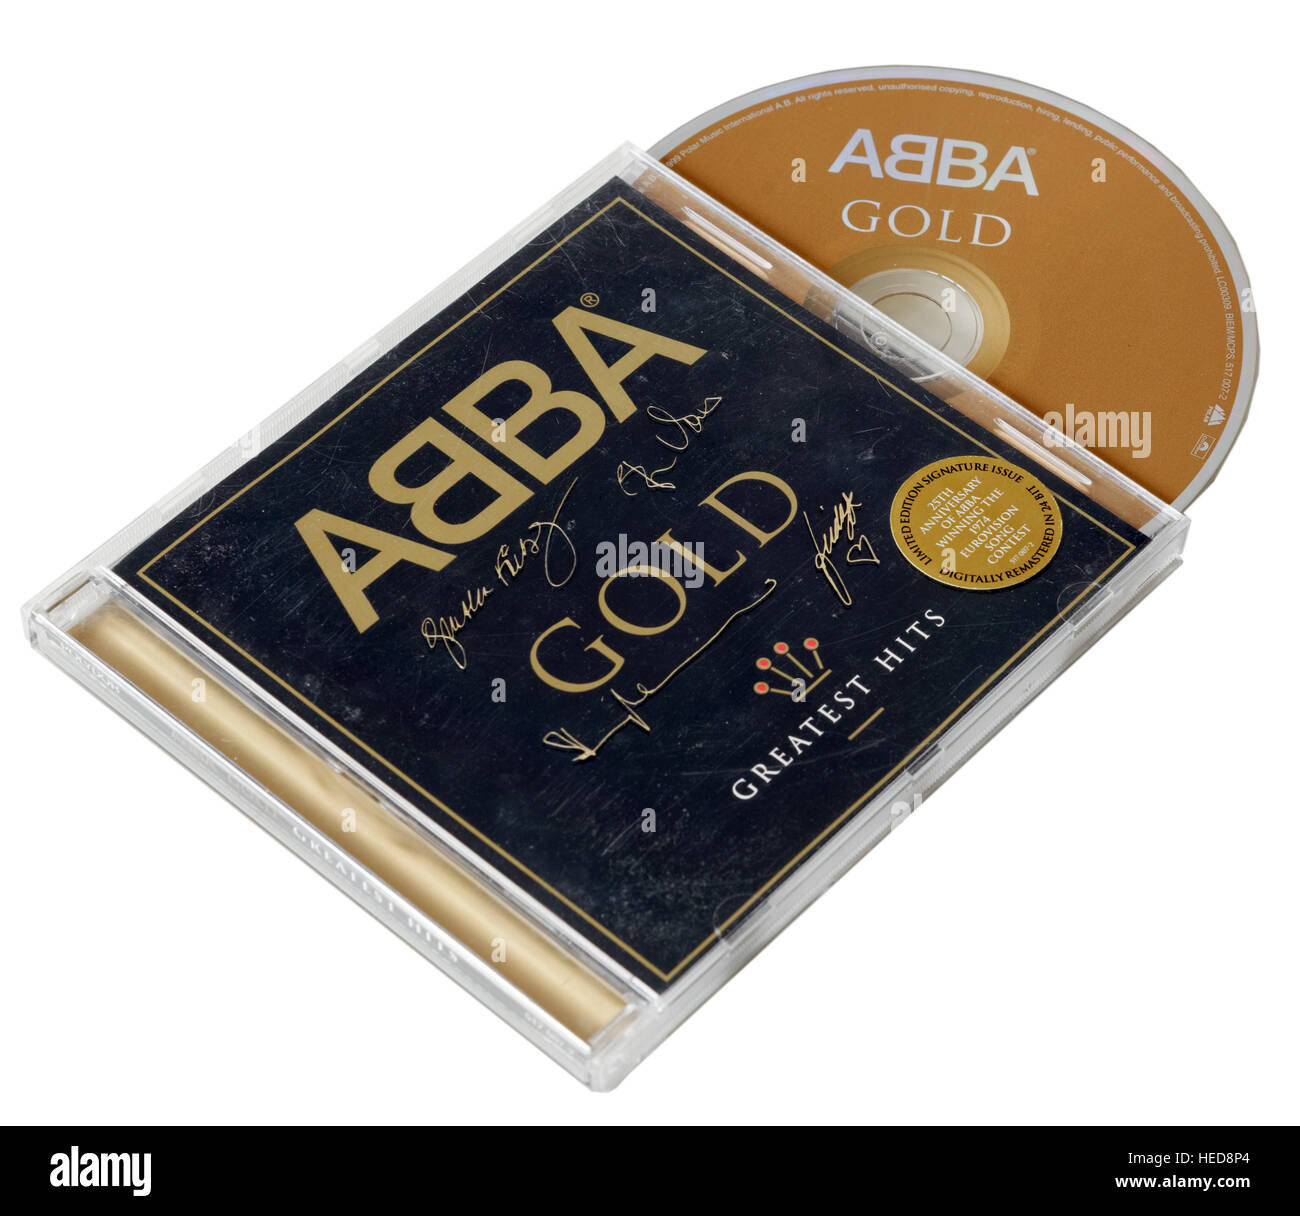 Abba Gold CD Stock Photo